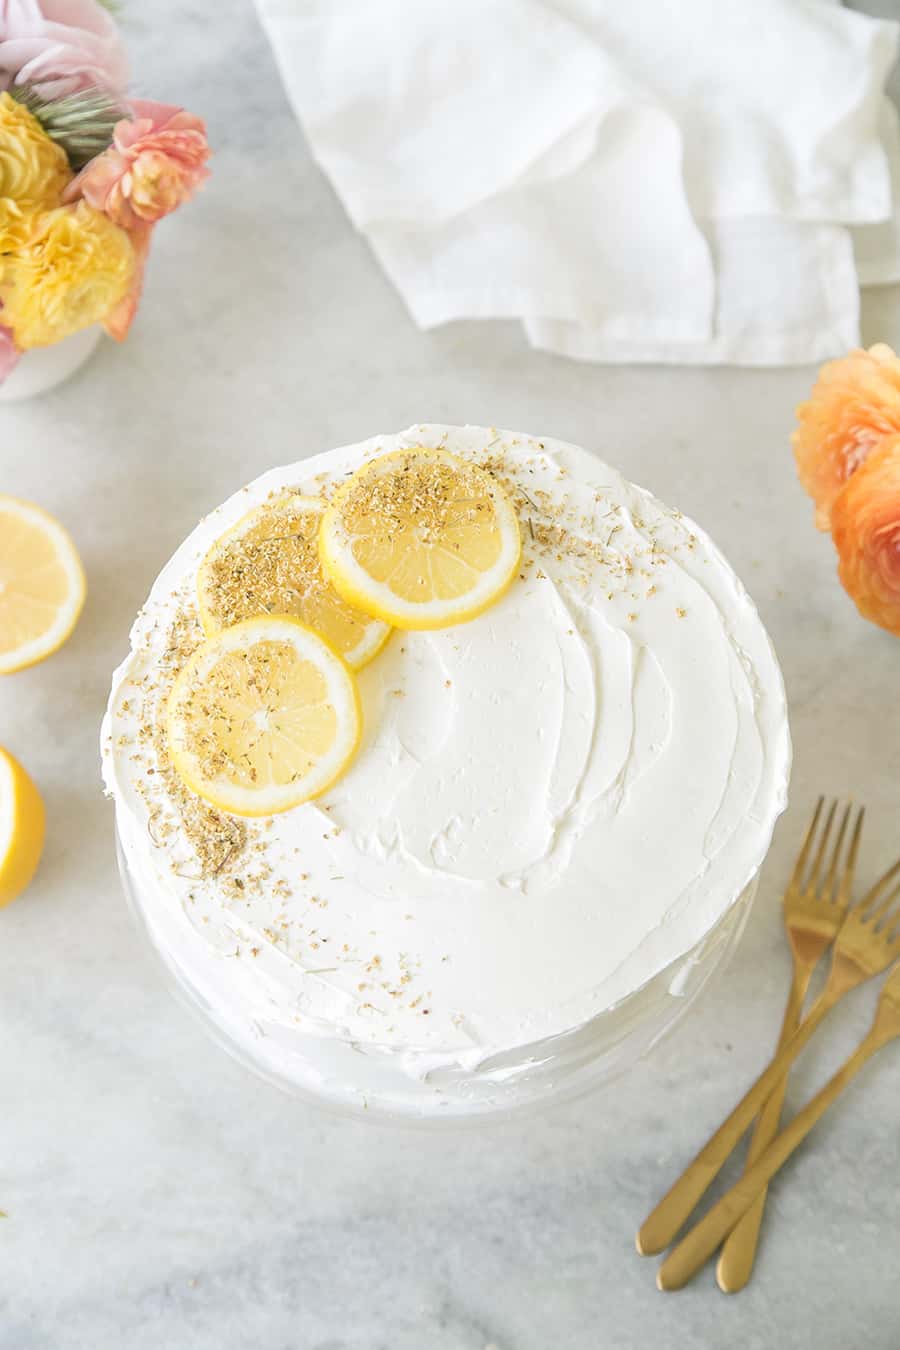 A lemon elderflower cake decorated with slices of lemon